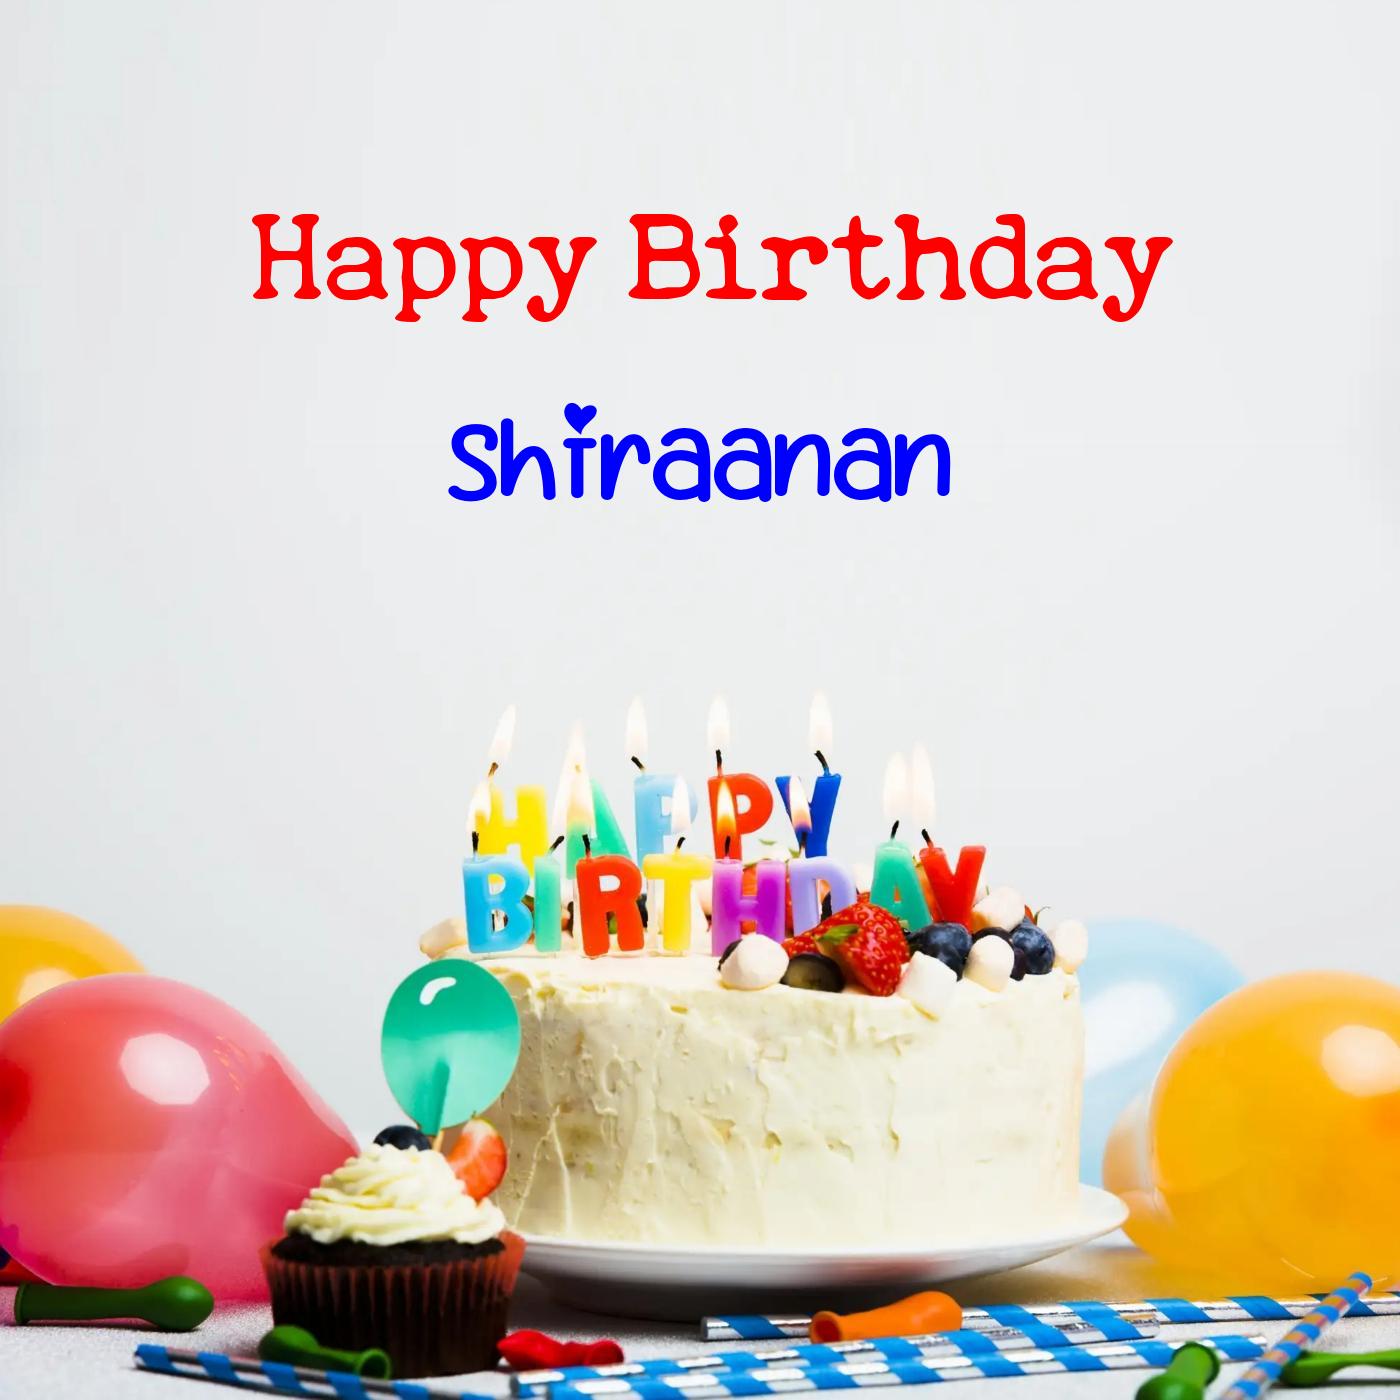 Happy Birthday Shiraanan Cake Balloons Card